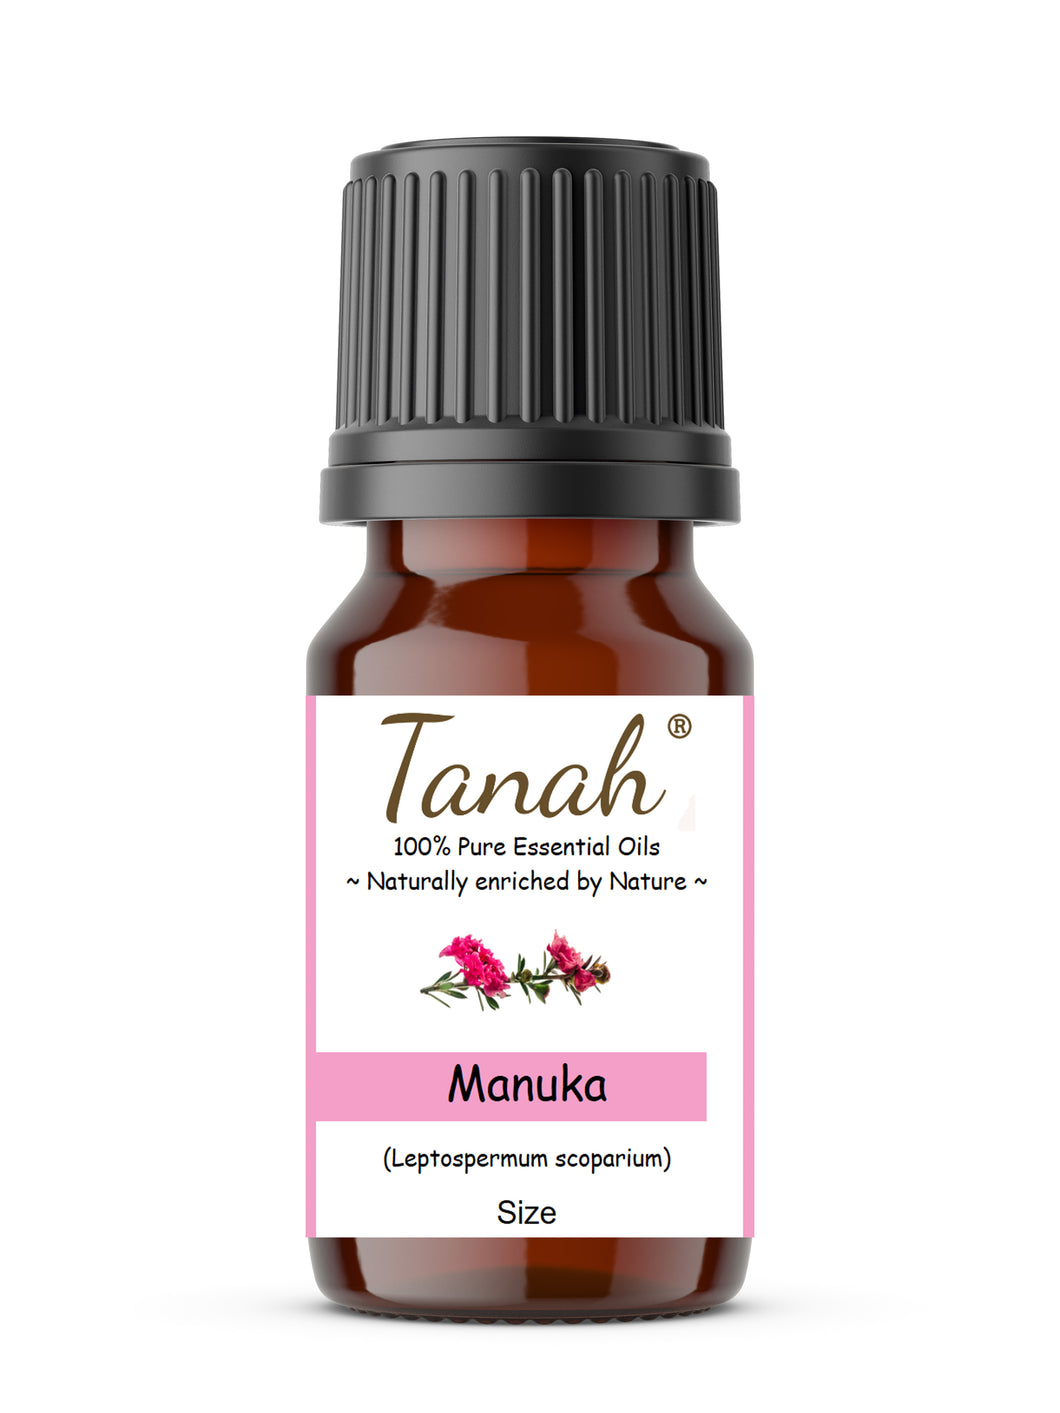 Manuka (New Zealand) essential oil (Leptospermum scorparium) | Where to buy? Tanah Essential Oil Company | Retail |  Wholesale | Australia